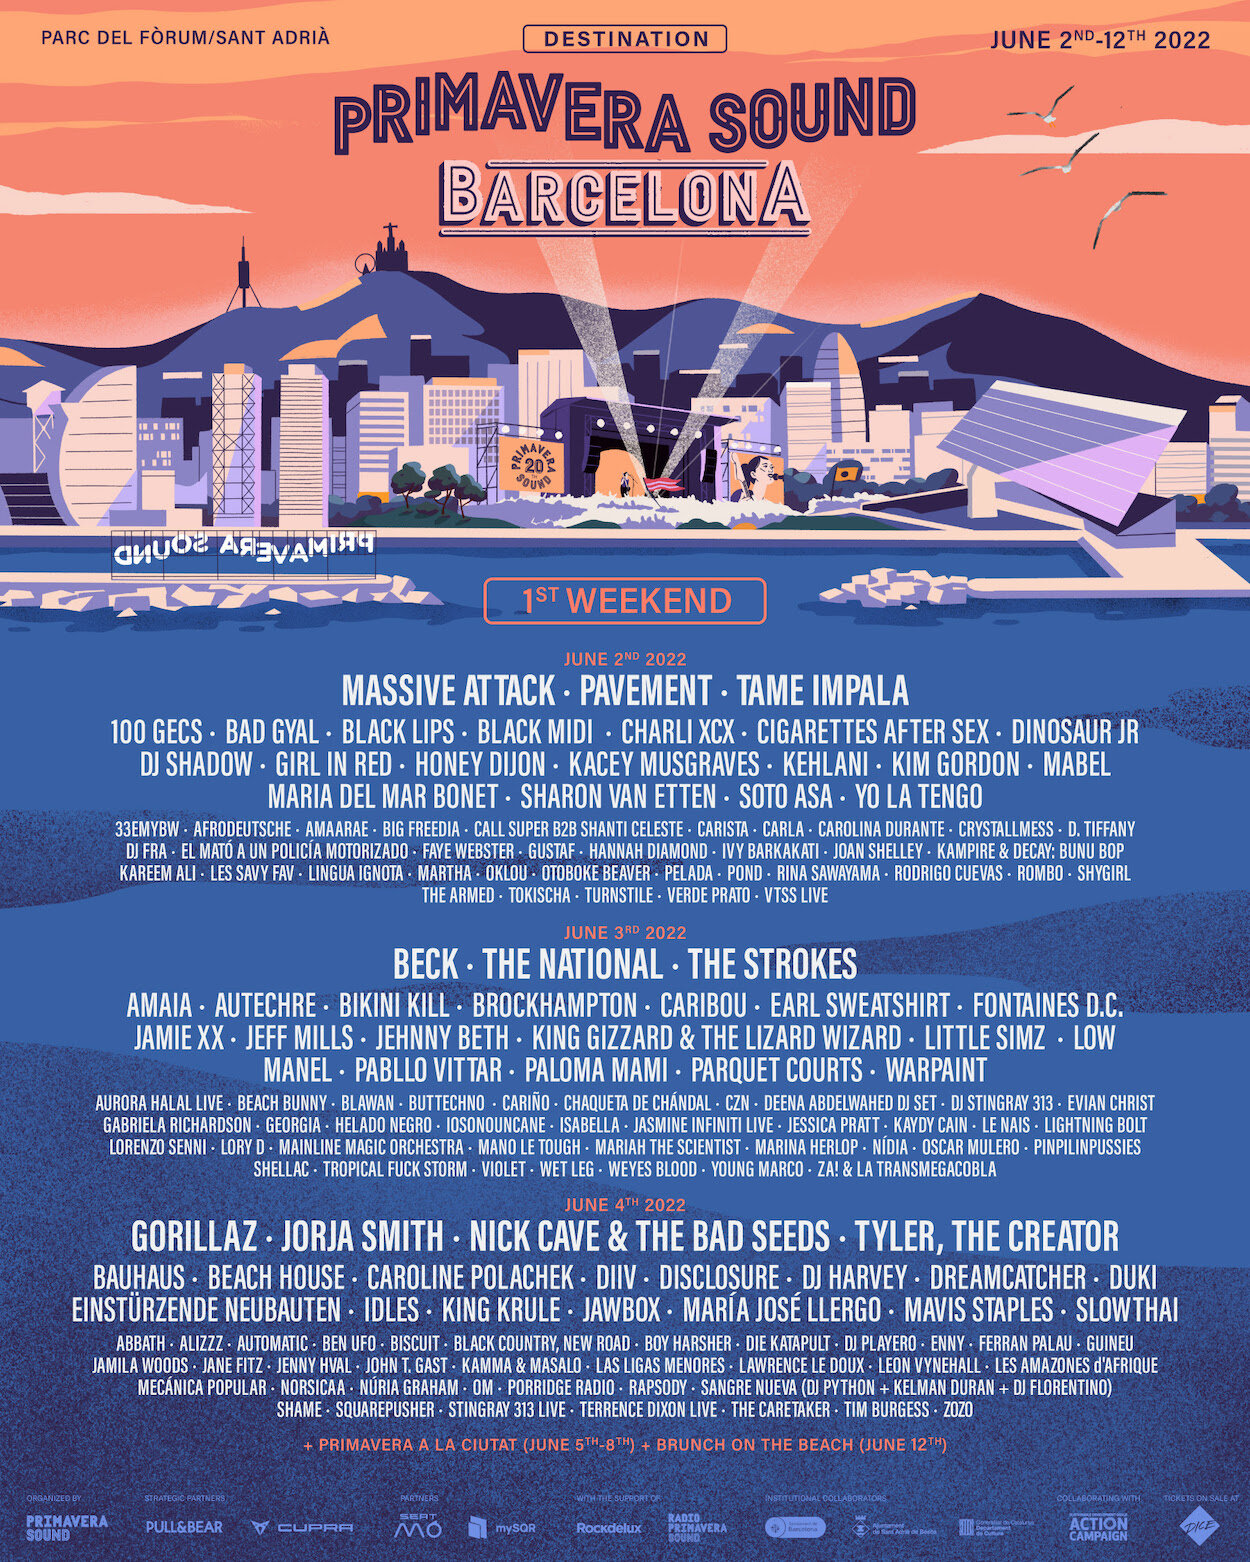 mejores festivales de musica españa